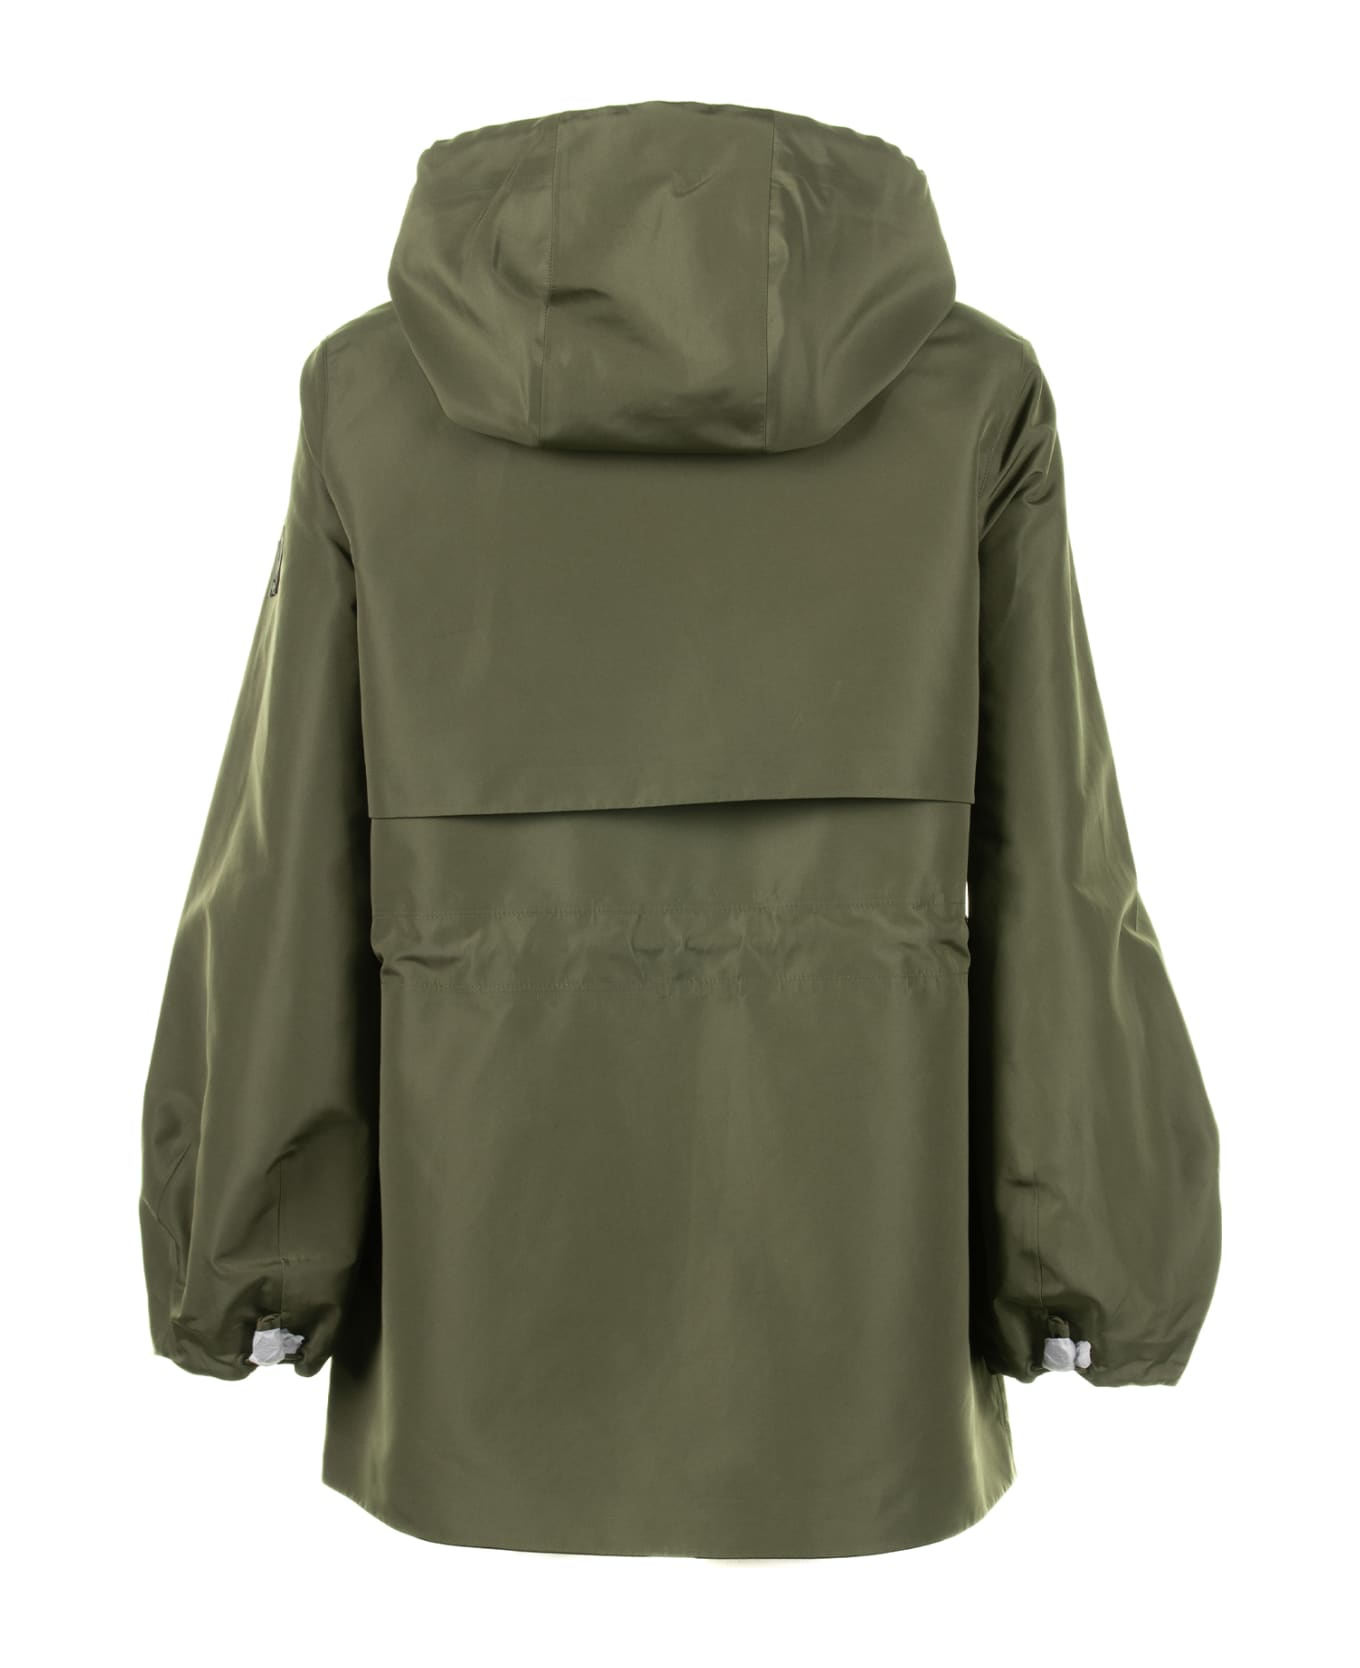 Mackage Kale Technical Rain Jacket With Drawstring Waist - LIGHT MILIATRY コート